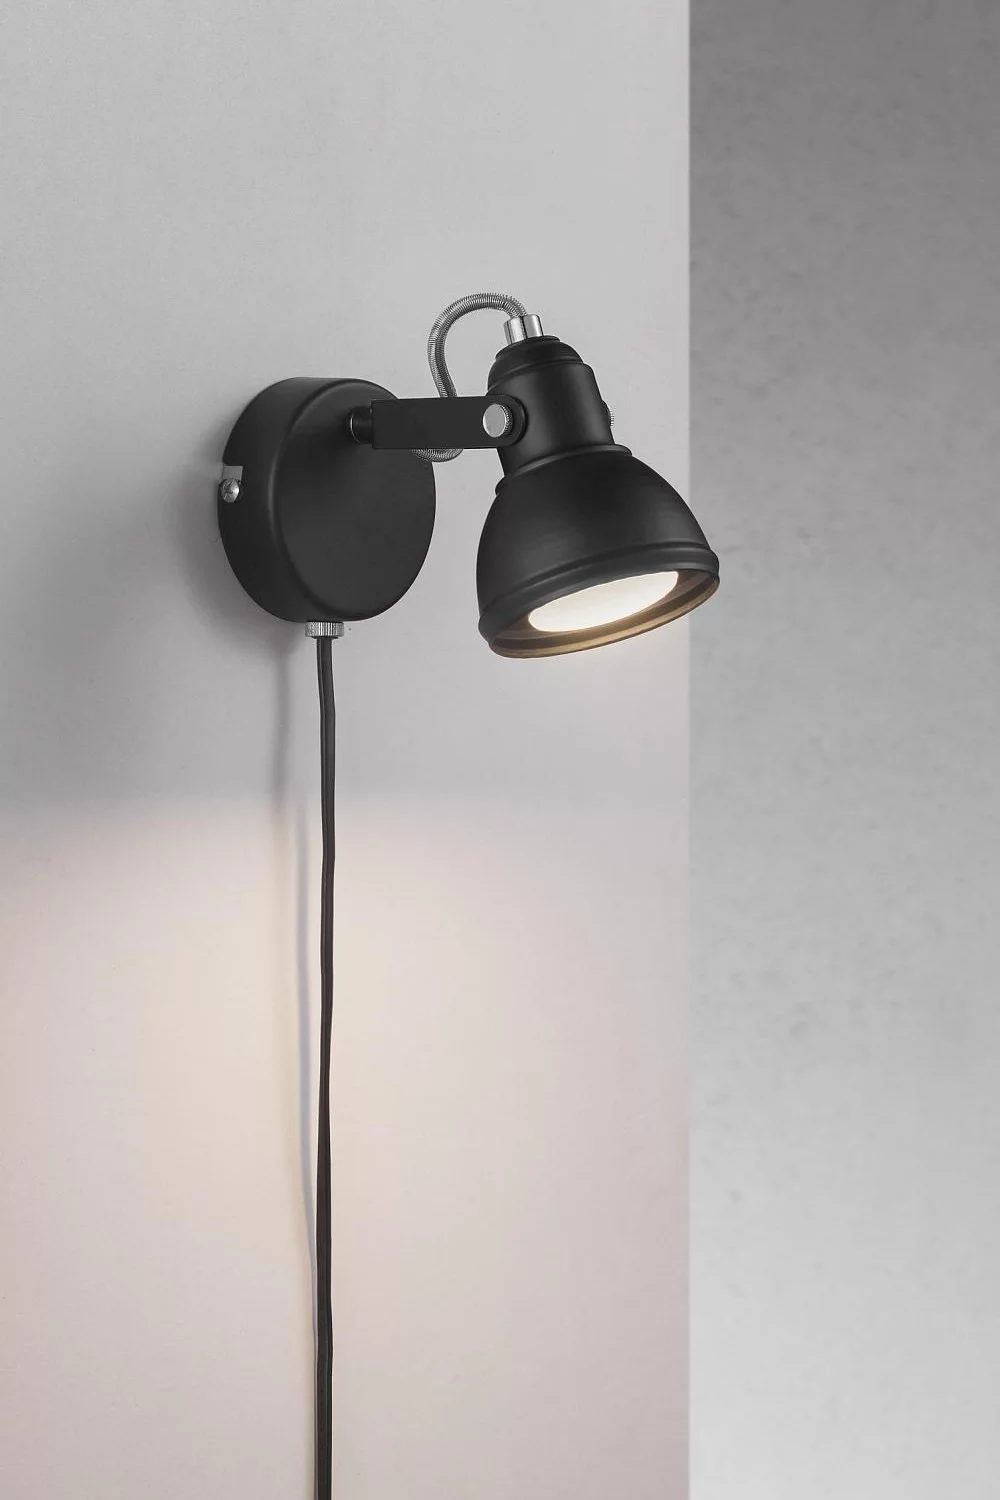   
                        
                        Бра NORDLUX (Дания) 19999    
                         в стиле Лофт.  
                        Тип источника света: светодиодная лампа, сменная.                                                 Цвета плафонов и подвесок: Черный.                         Материал: Металл.                          фото 3